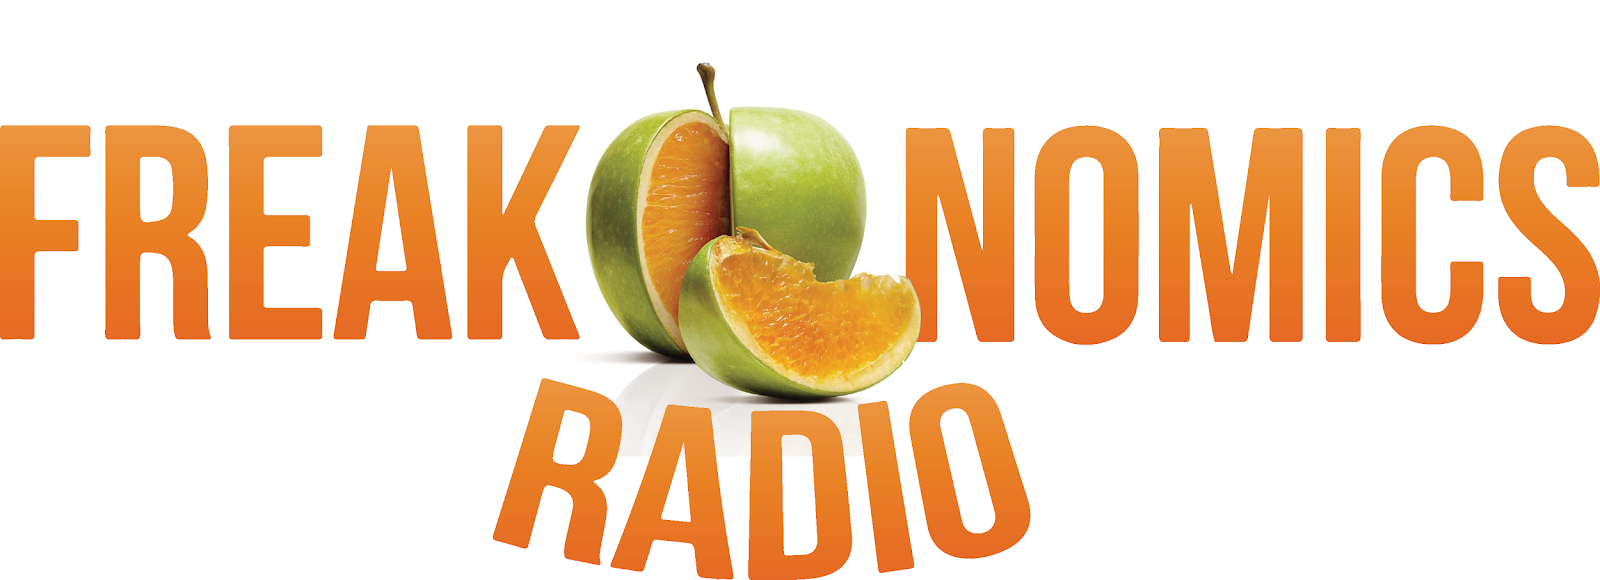 Freakonomics rádio